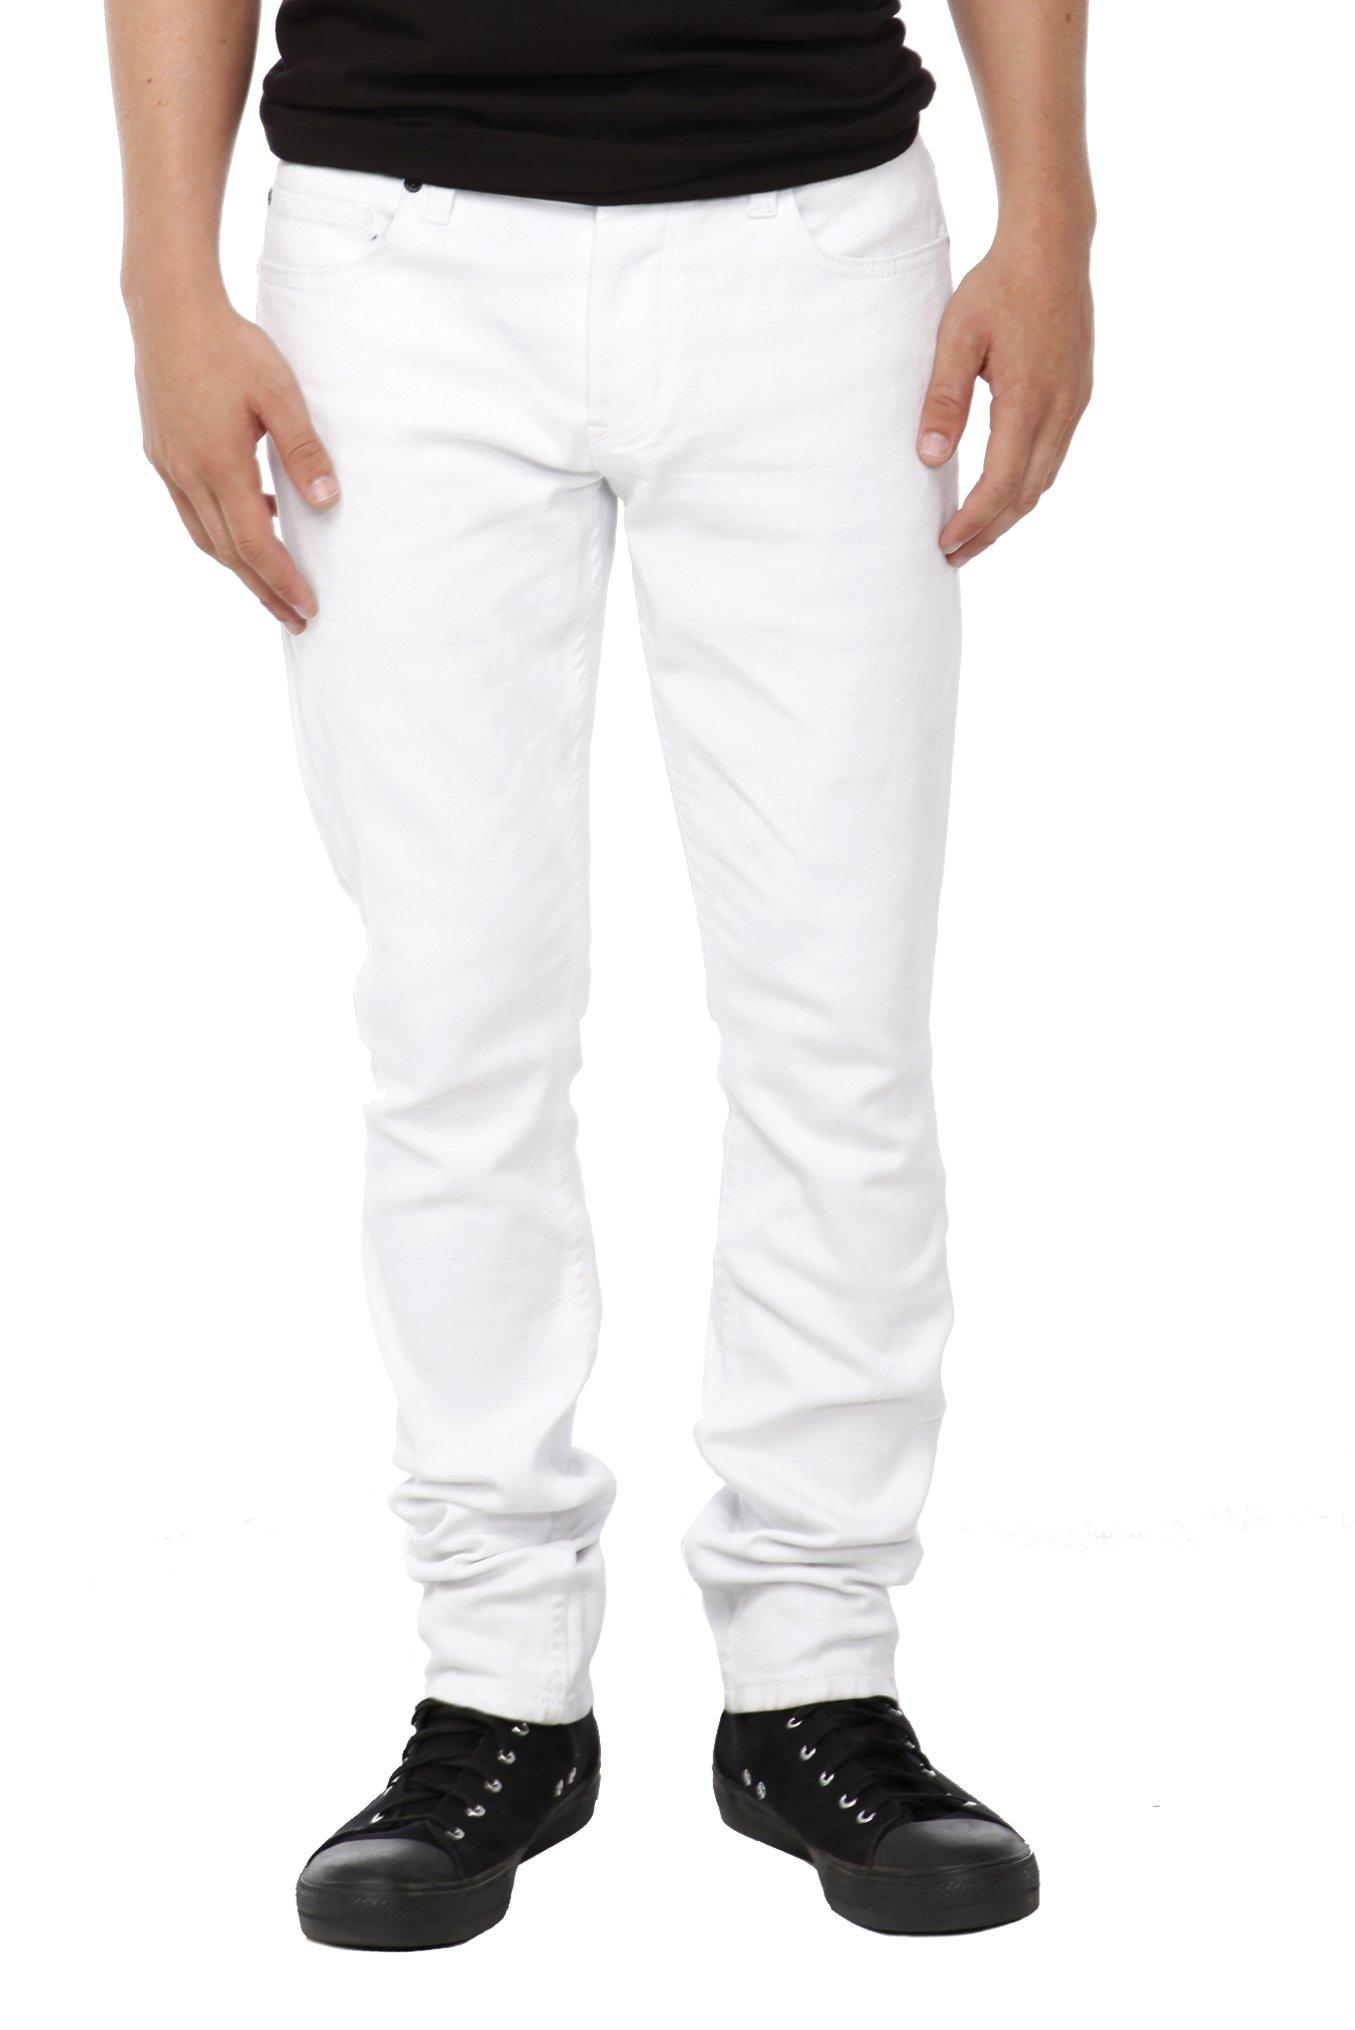 XXX RUDE White Skinny Fit Denim Jeans, BLACK, hi-res